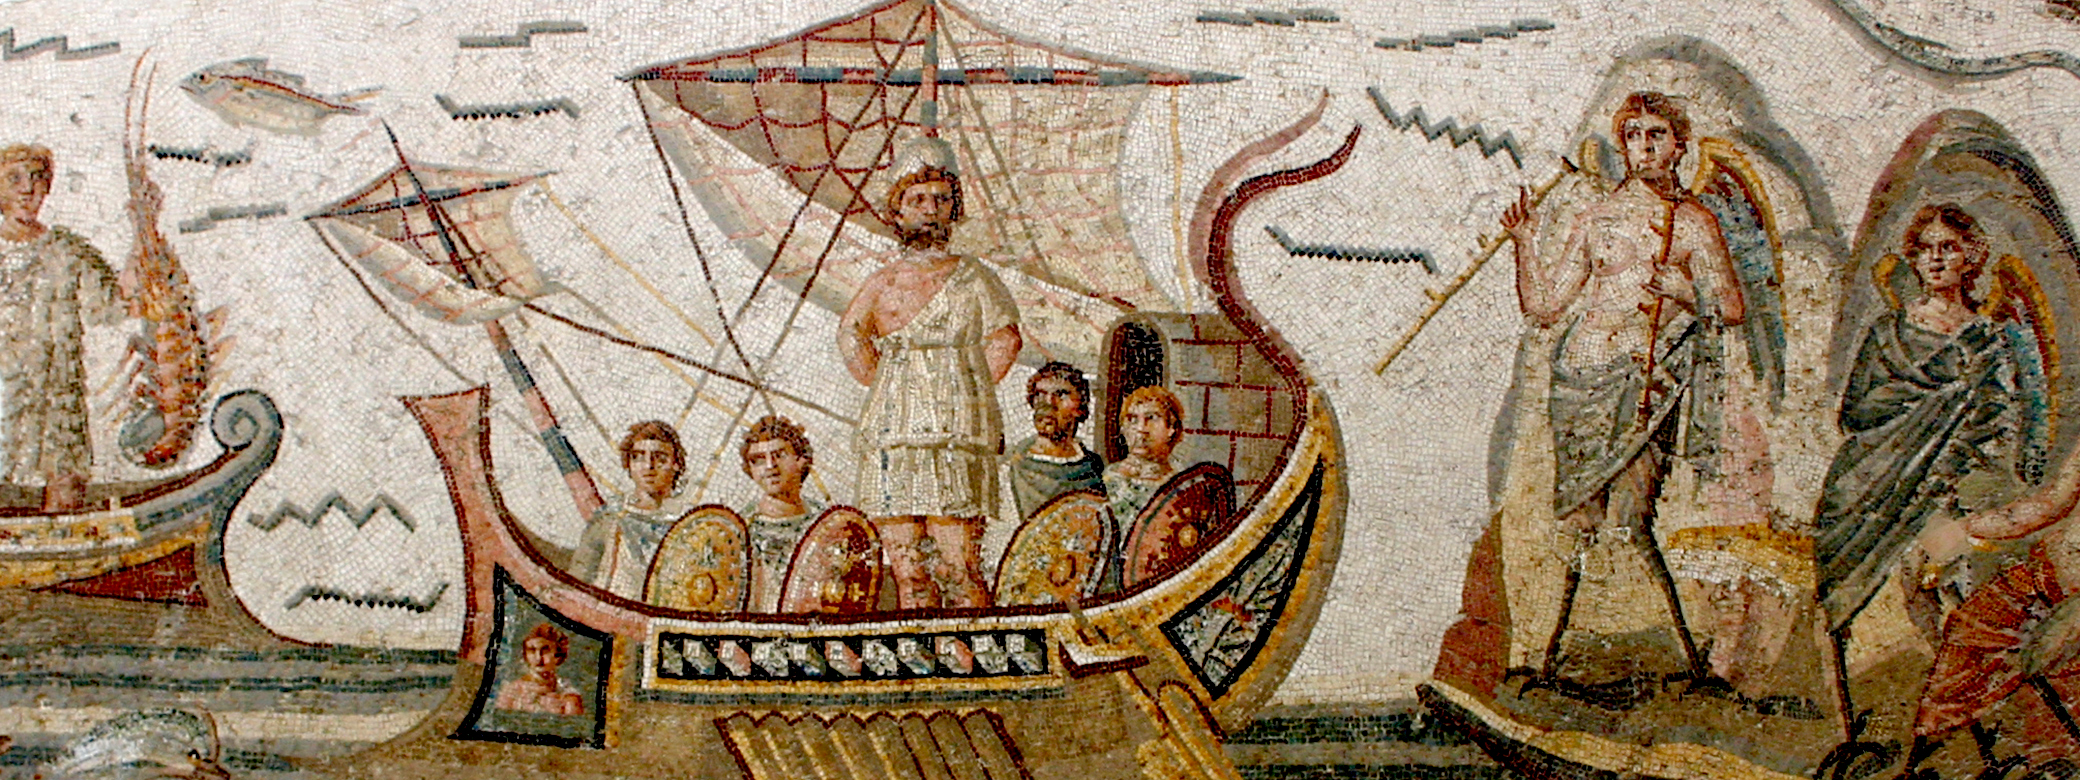 Mosaic of Odysseus' journey